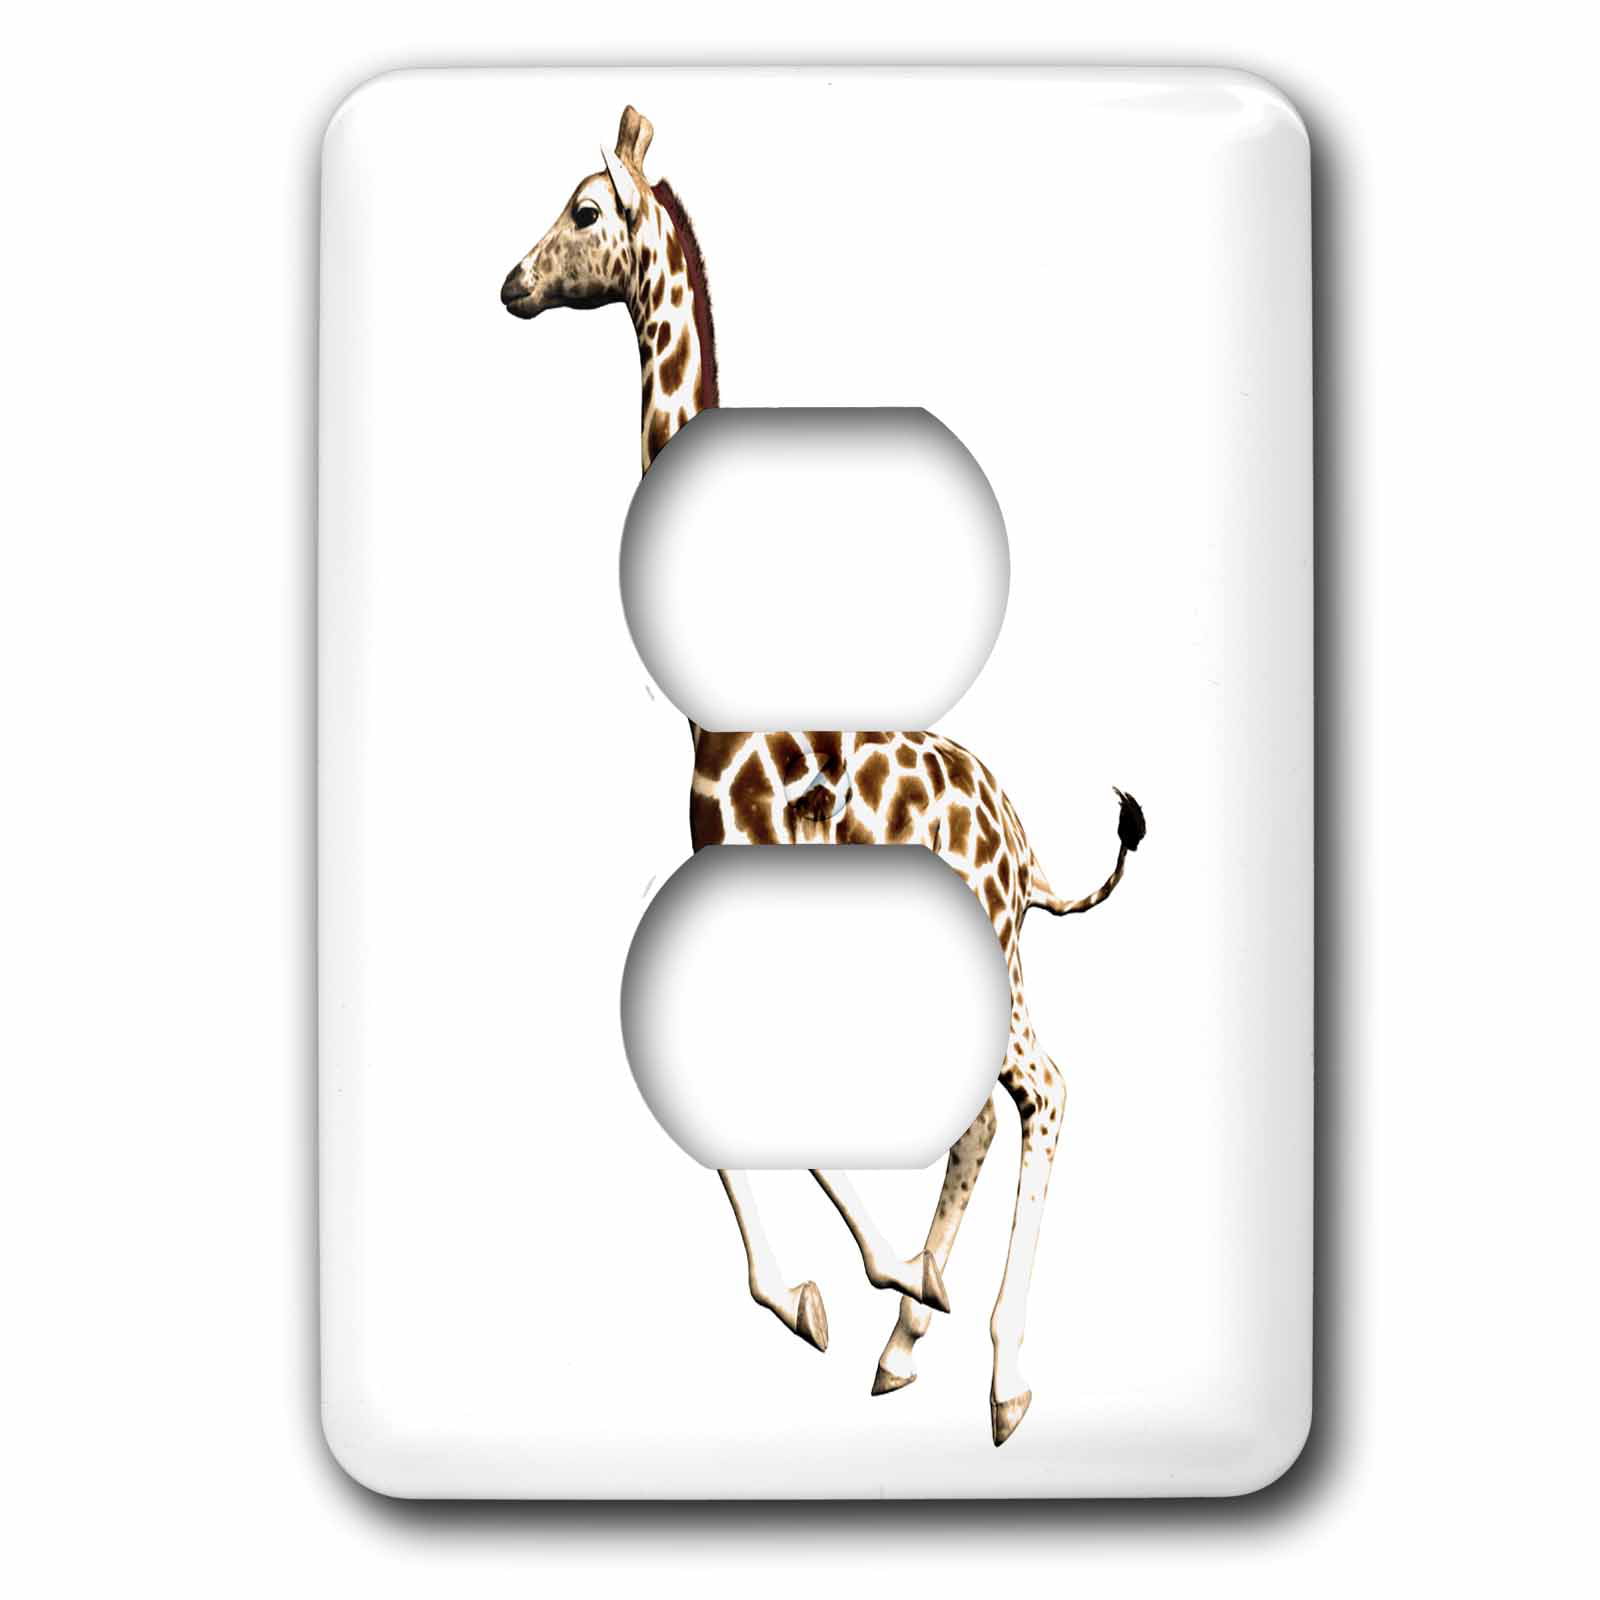 Baby Giraffe Running Wallplate Wall Plate Decorative Light Switch Plate Cover 